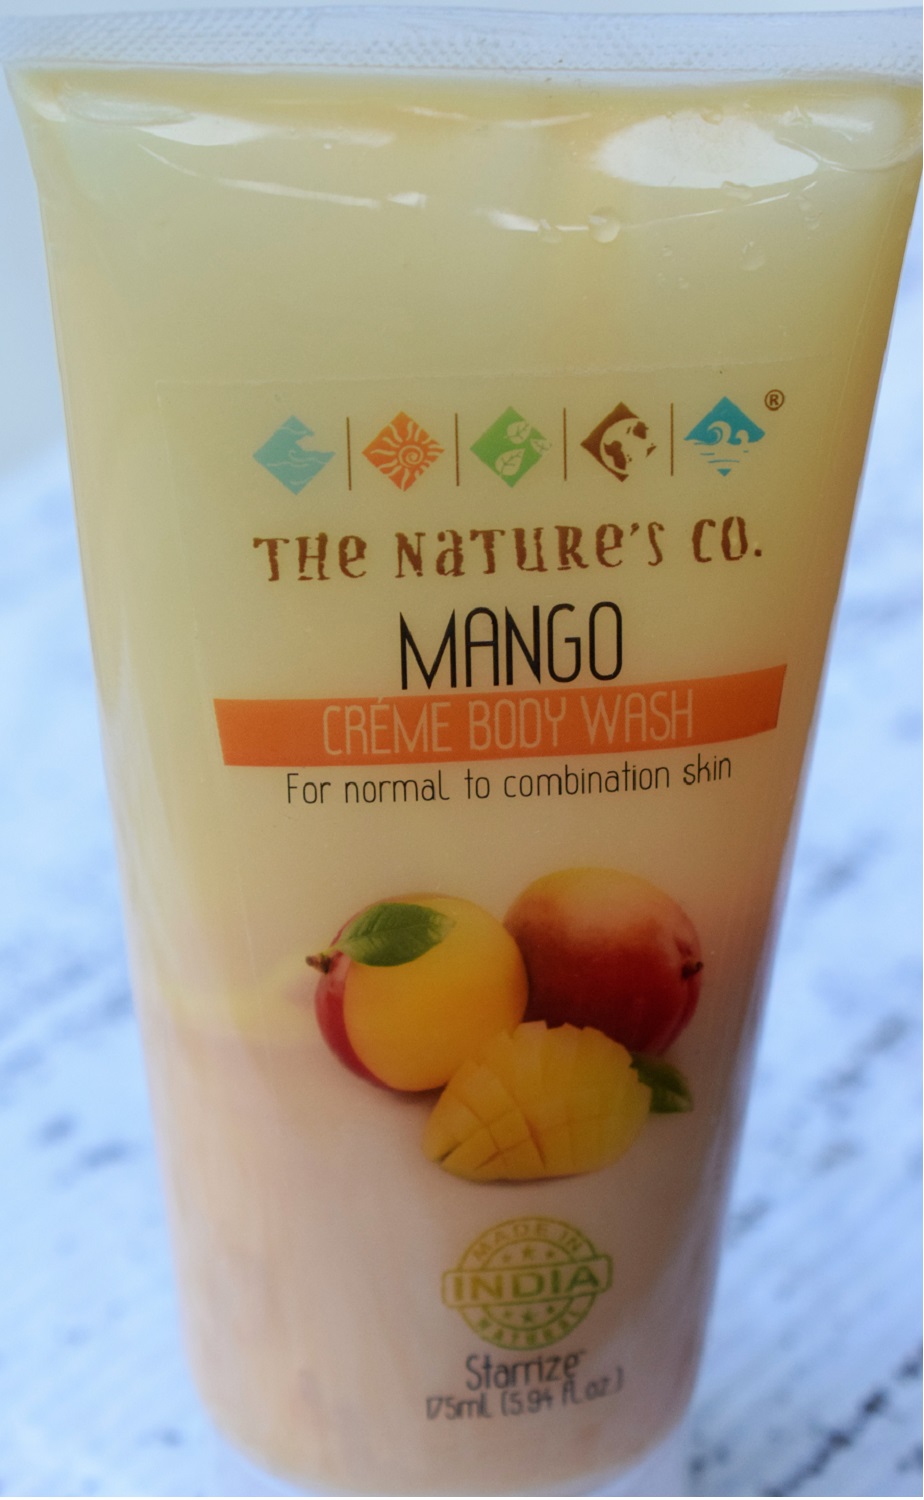 The Nature's Co Mango Creme Body Wash